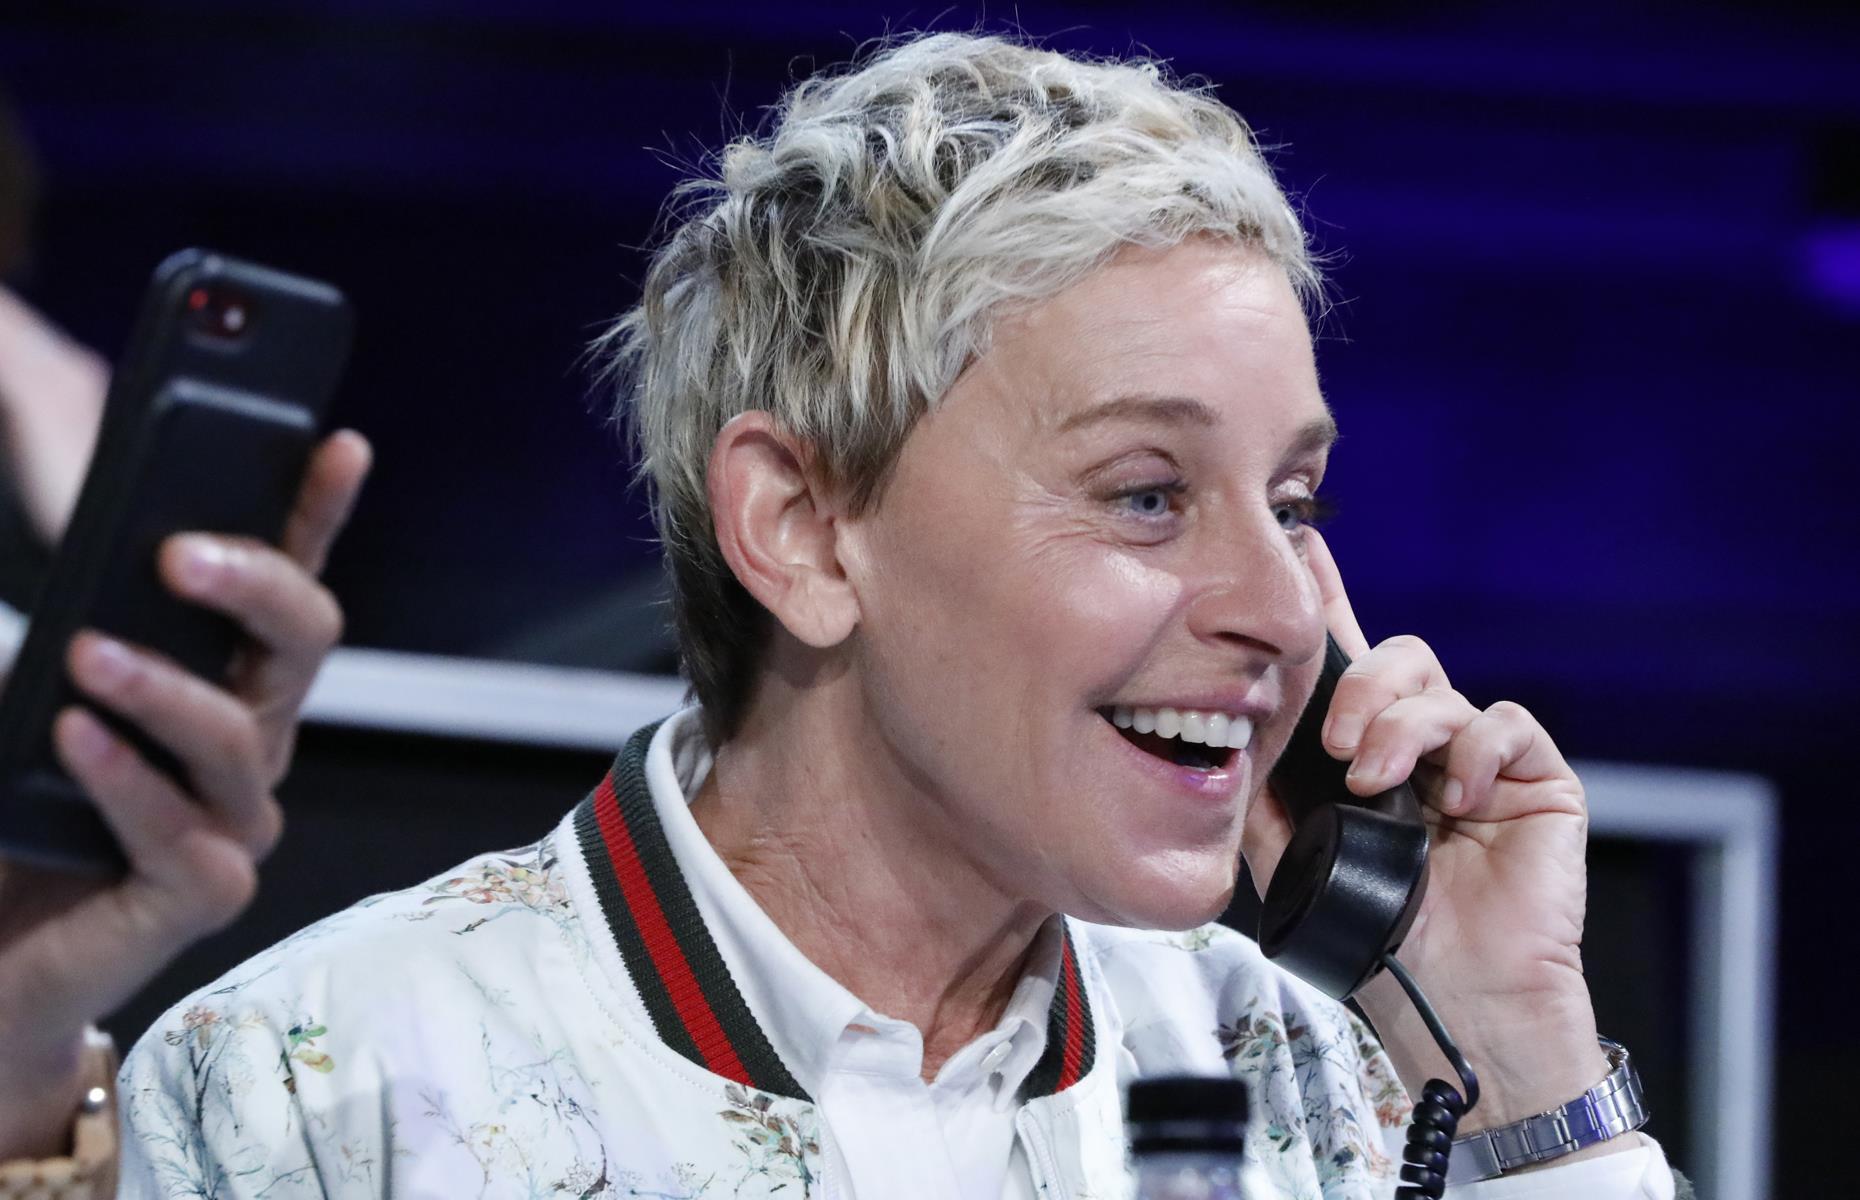 Ellen DeGeneres worked at JCPenney